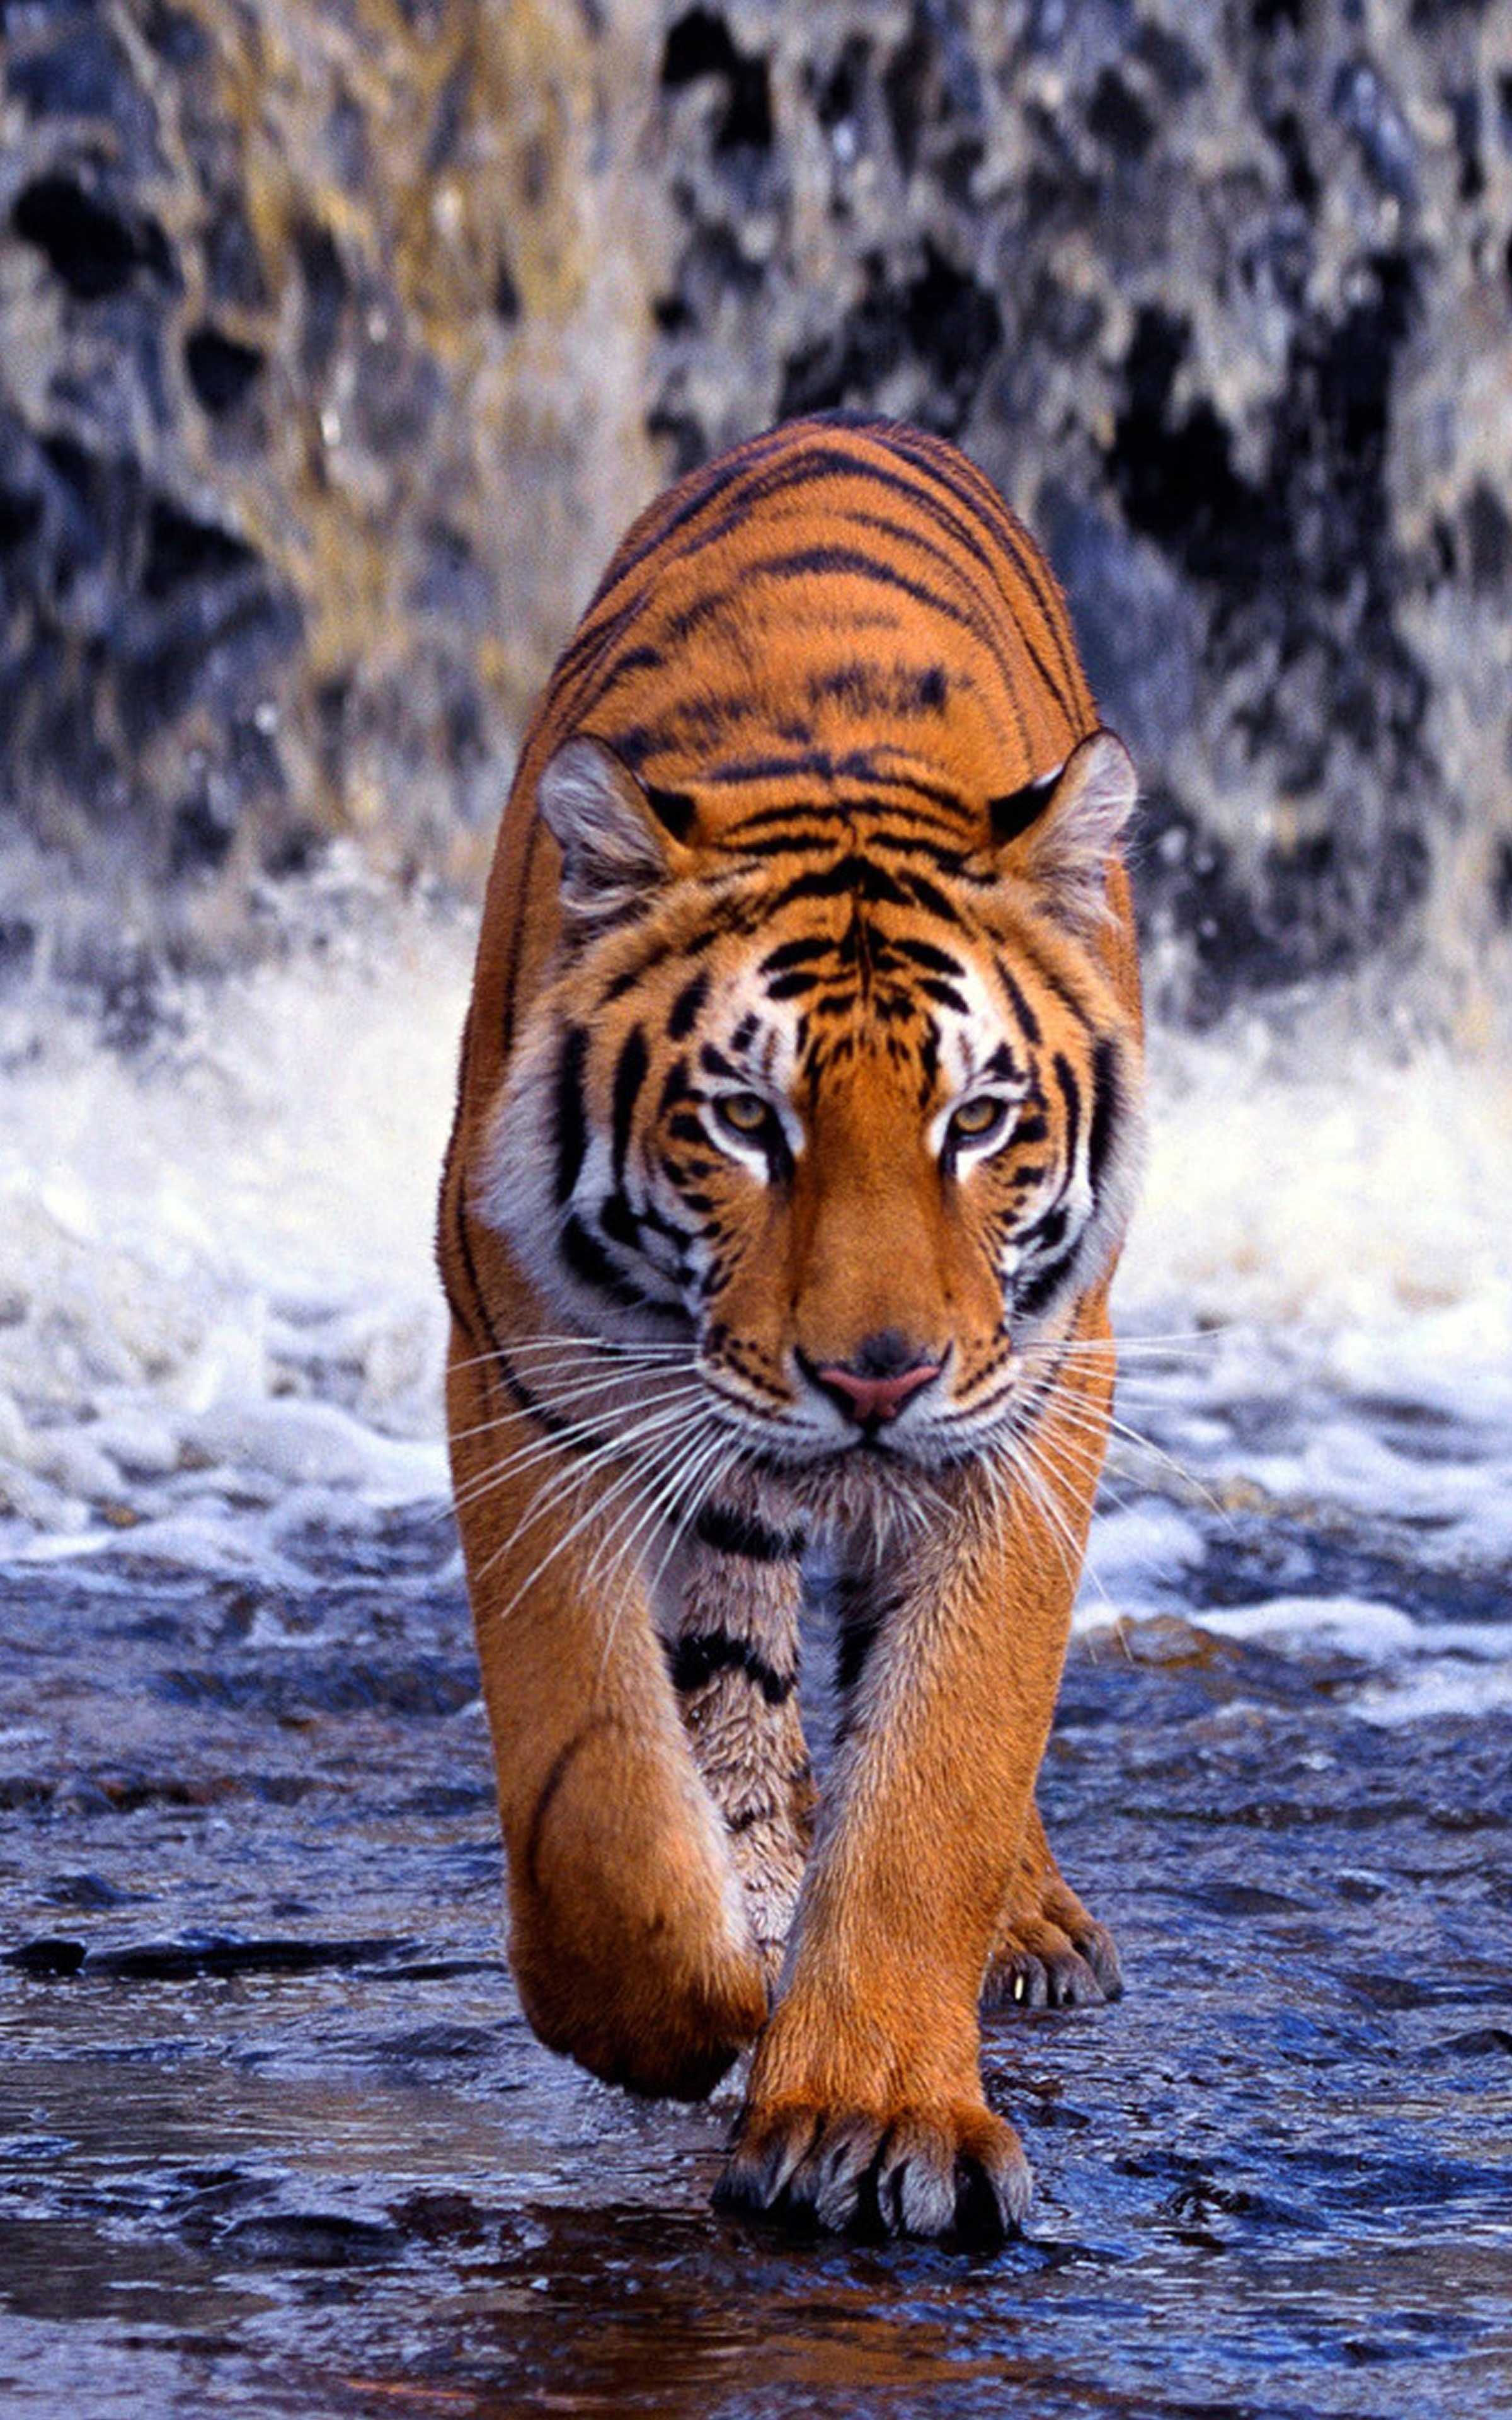 Tiger Wallpaper 4K Walking Top View Water ripples 4265